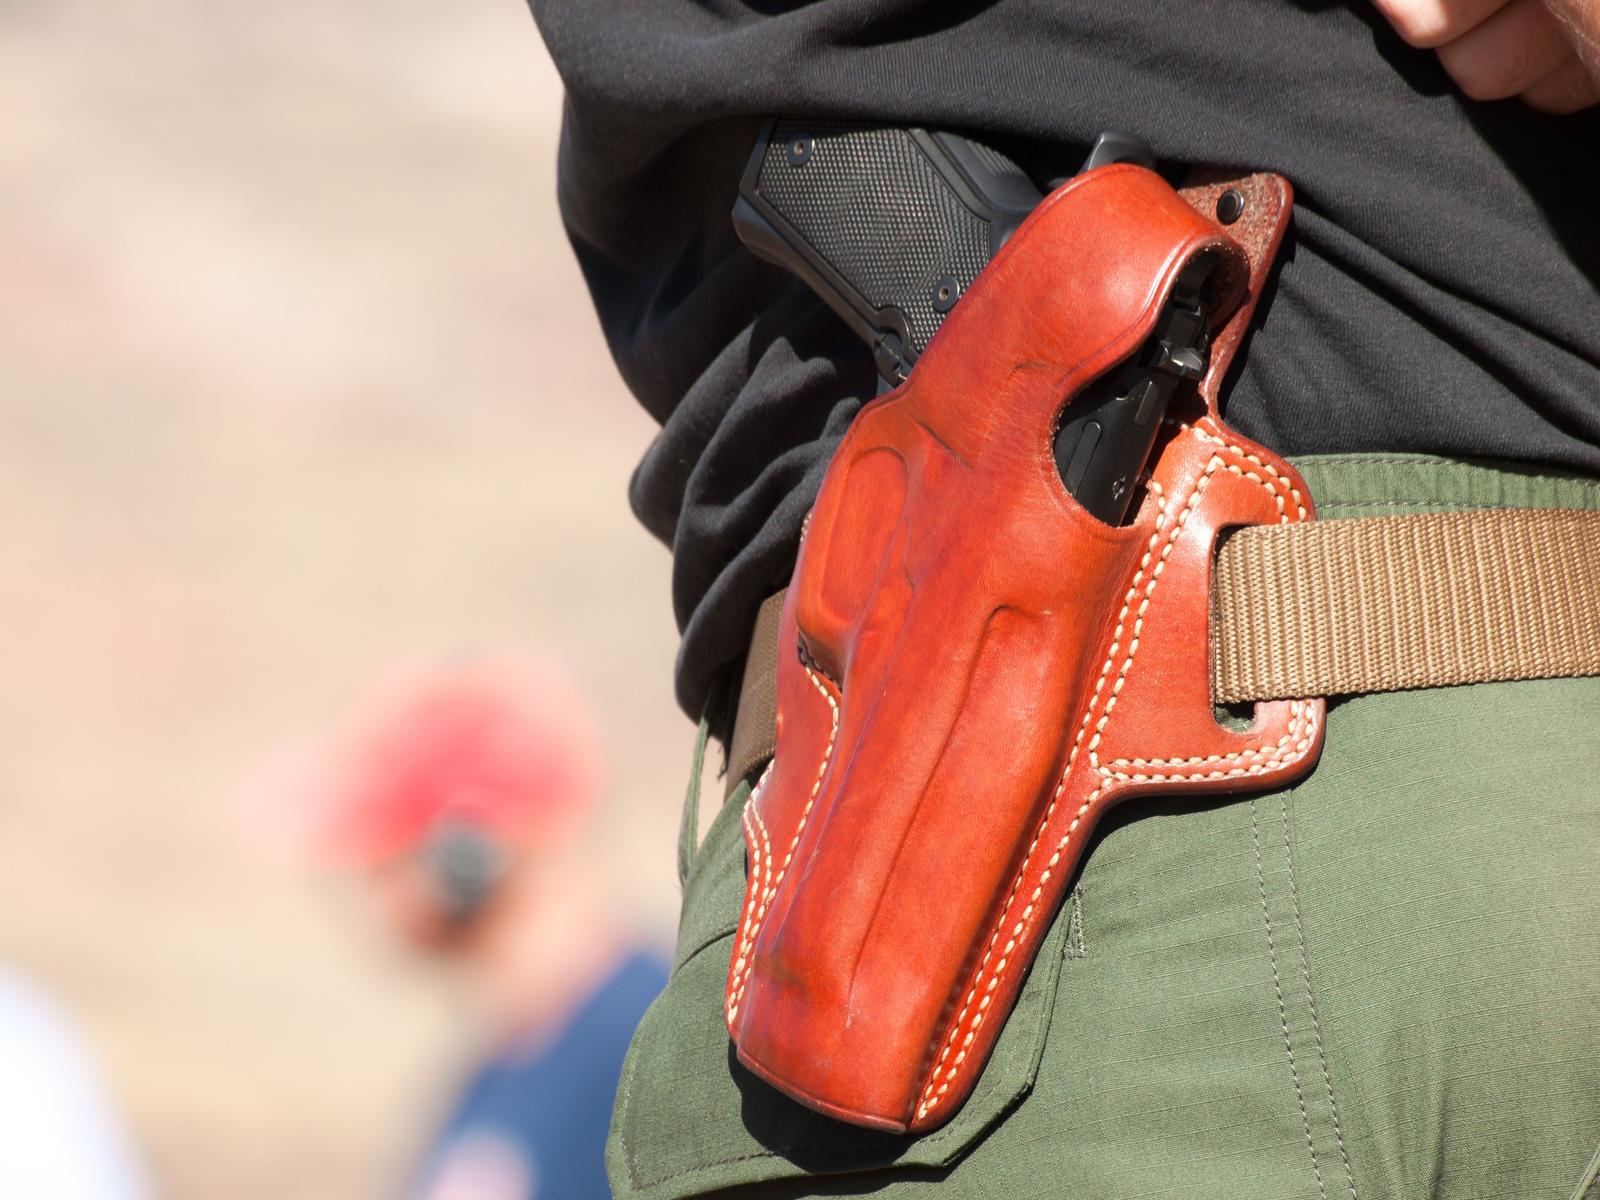 Self-Defense Gun Use  Violence Policy Center